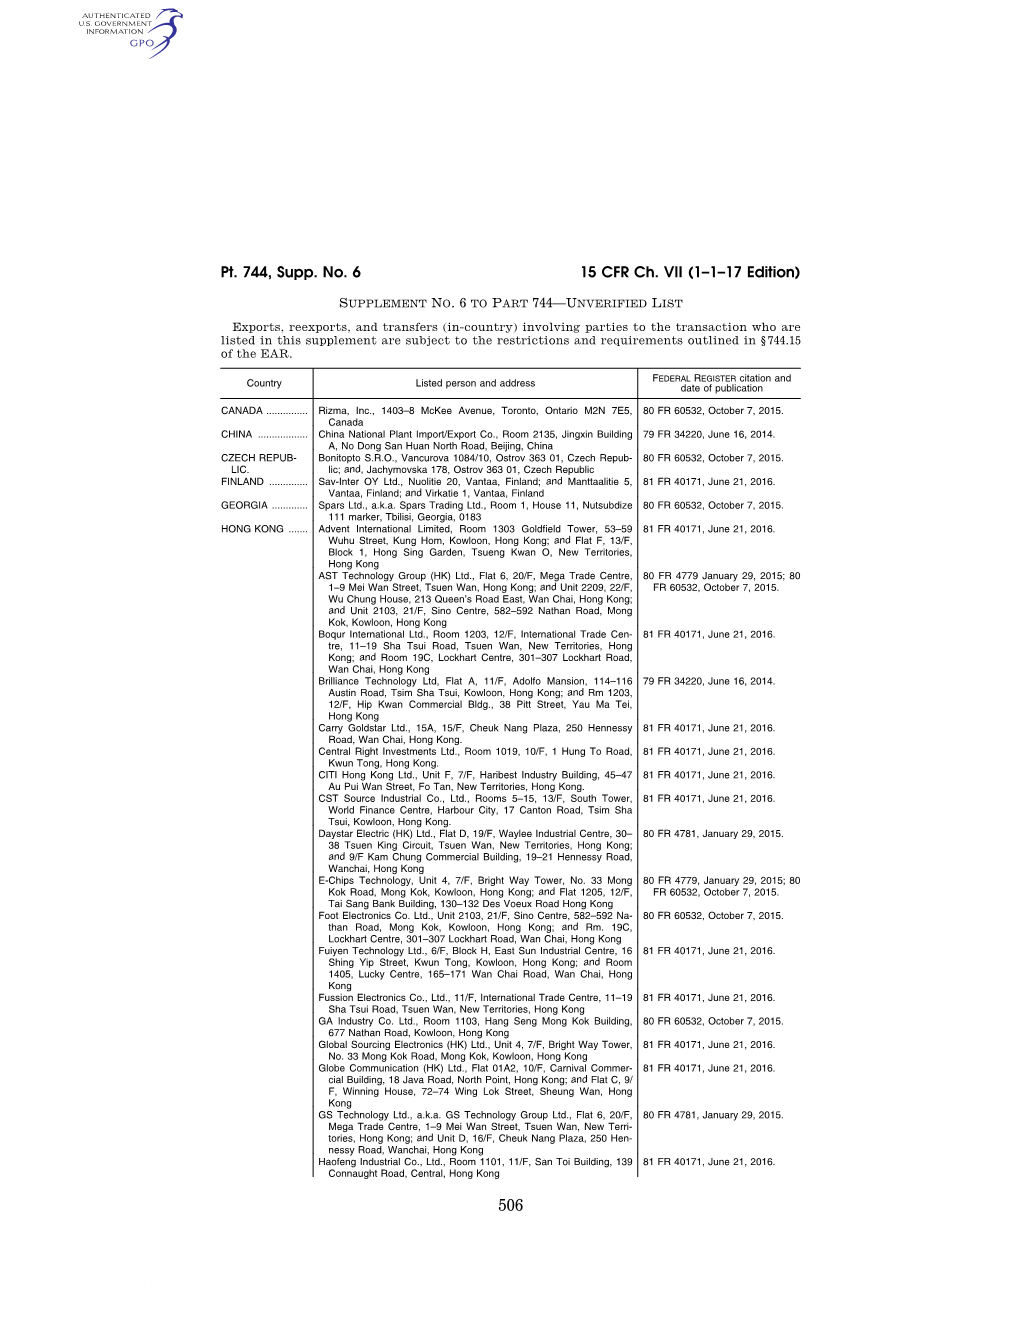 15 CFR Ch. VII (1–1–17 Edition) Pt. 744, Supp. No. 6